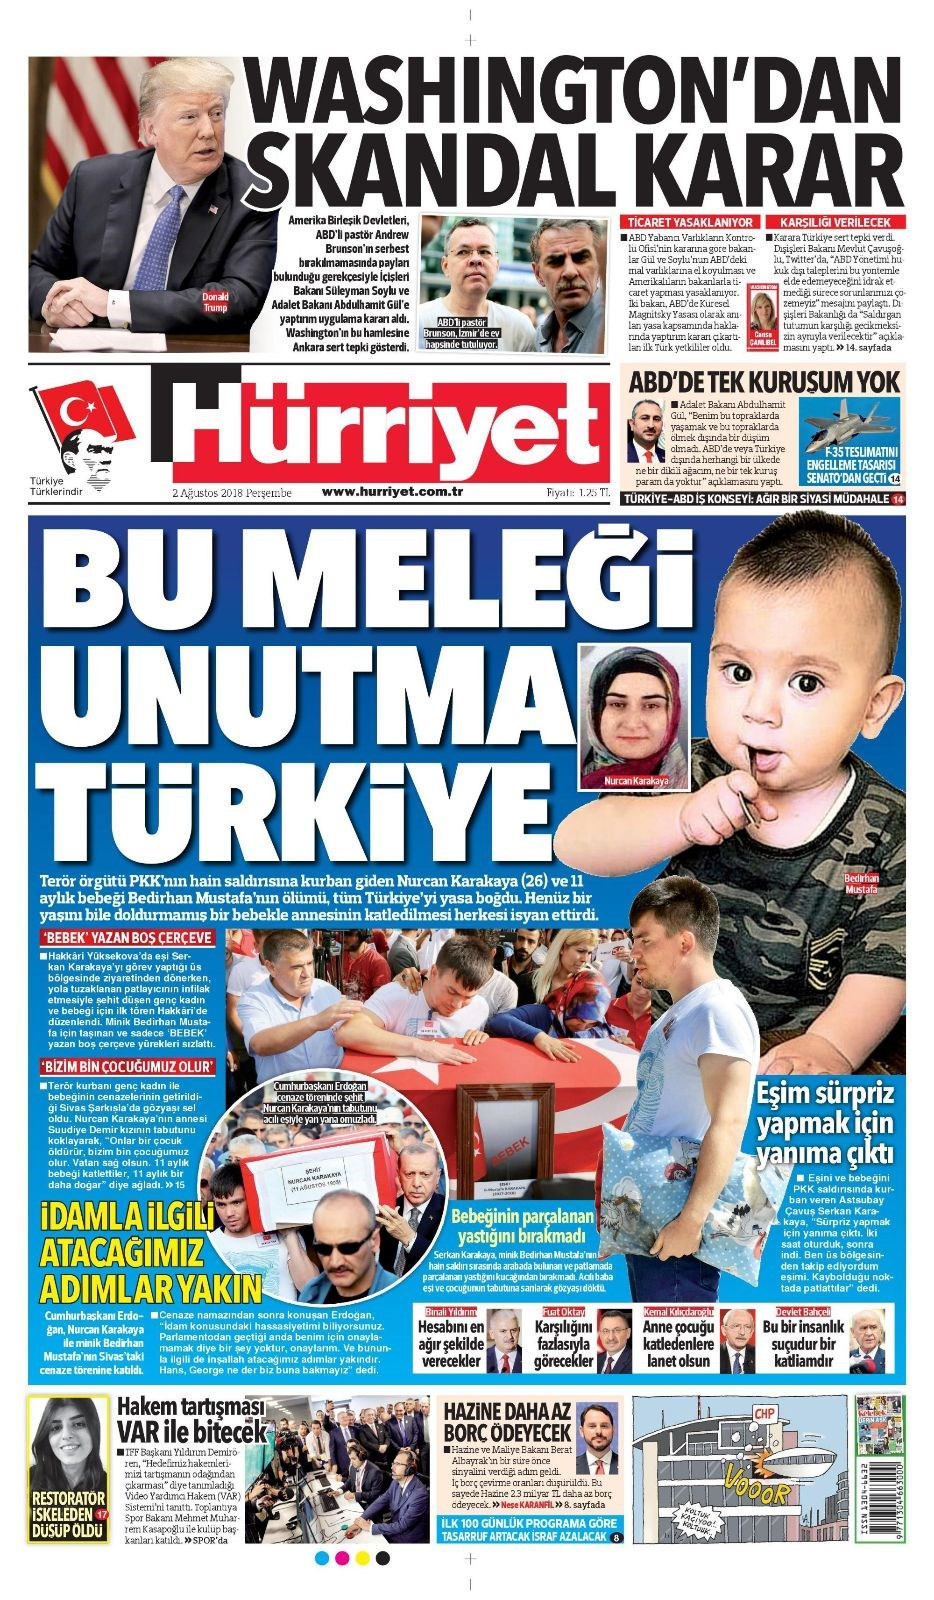 Gazete manşetleri 2 Ağustos 2018 Hürriyet - Posta - Sabah